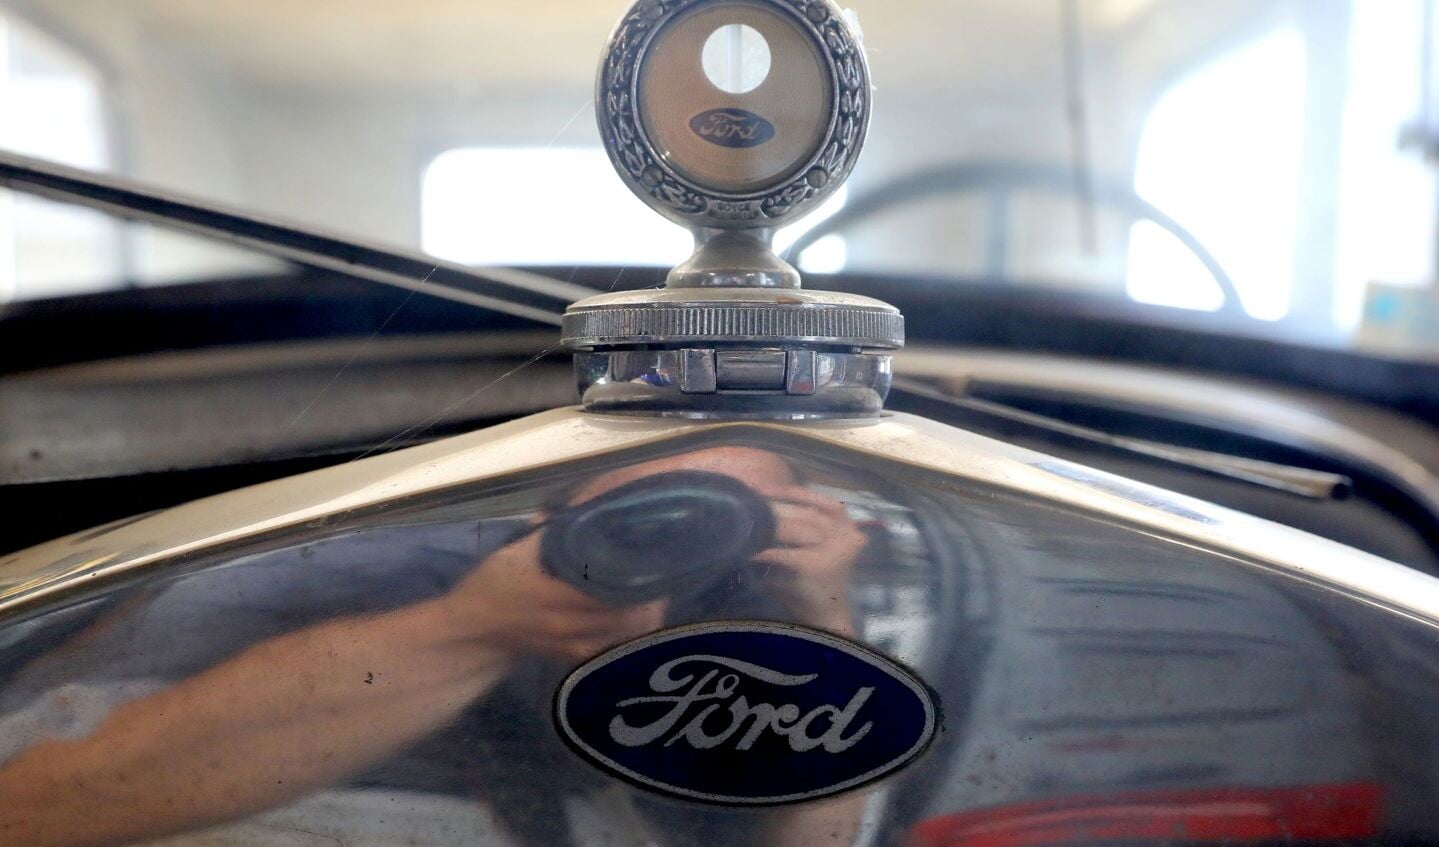 Detailfoto van de Ford.